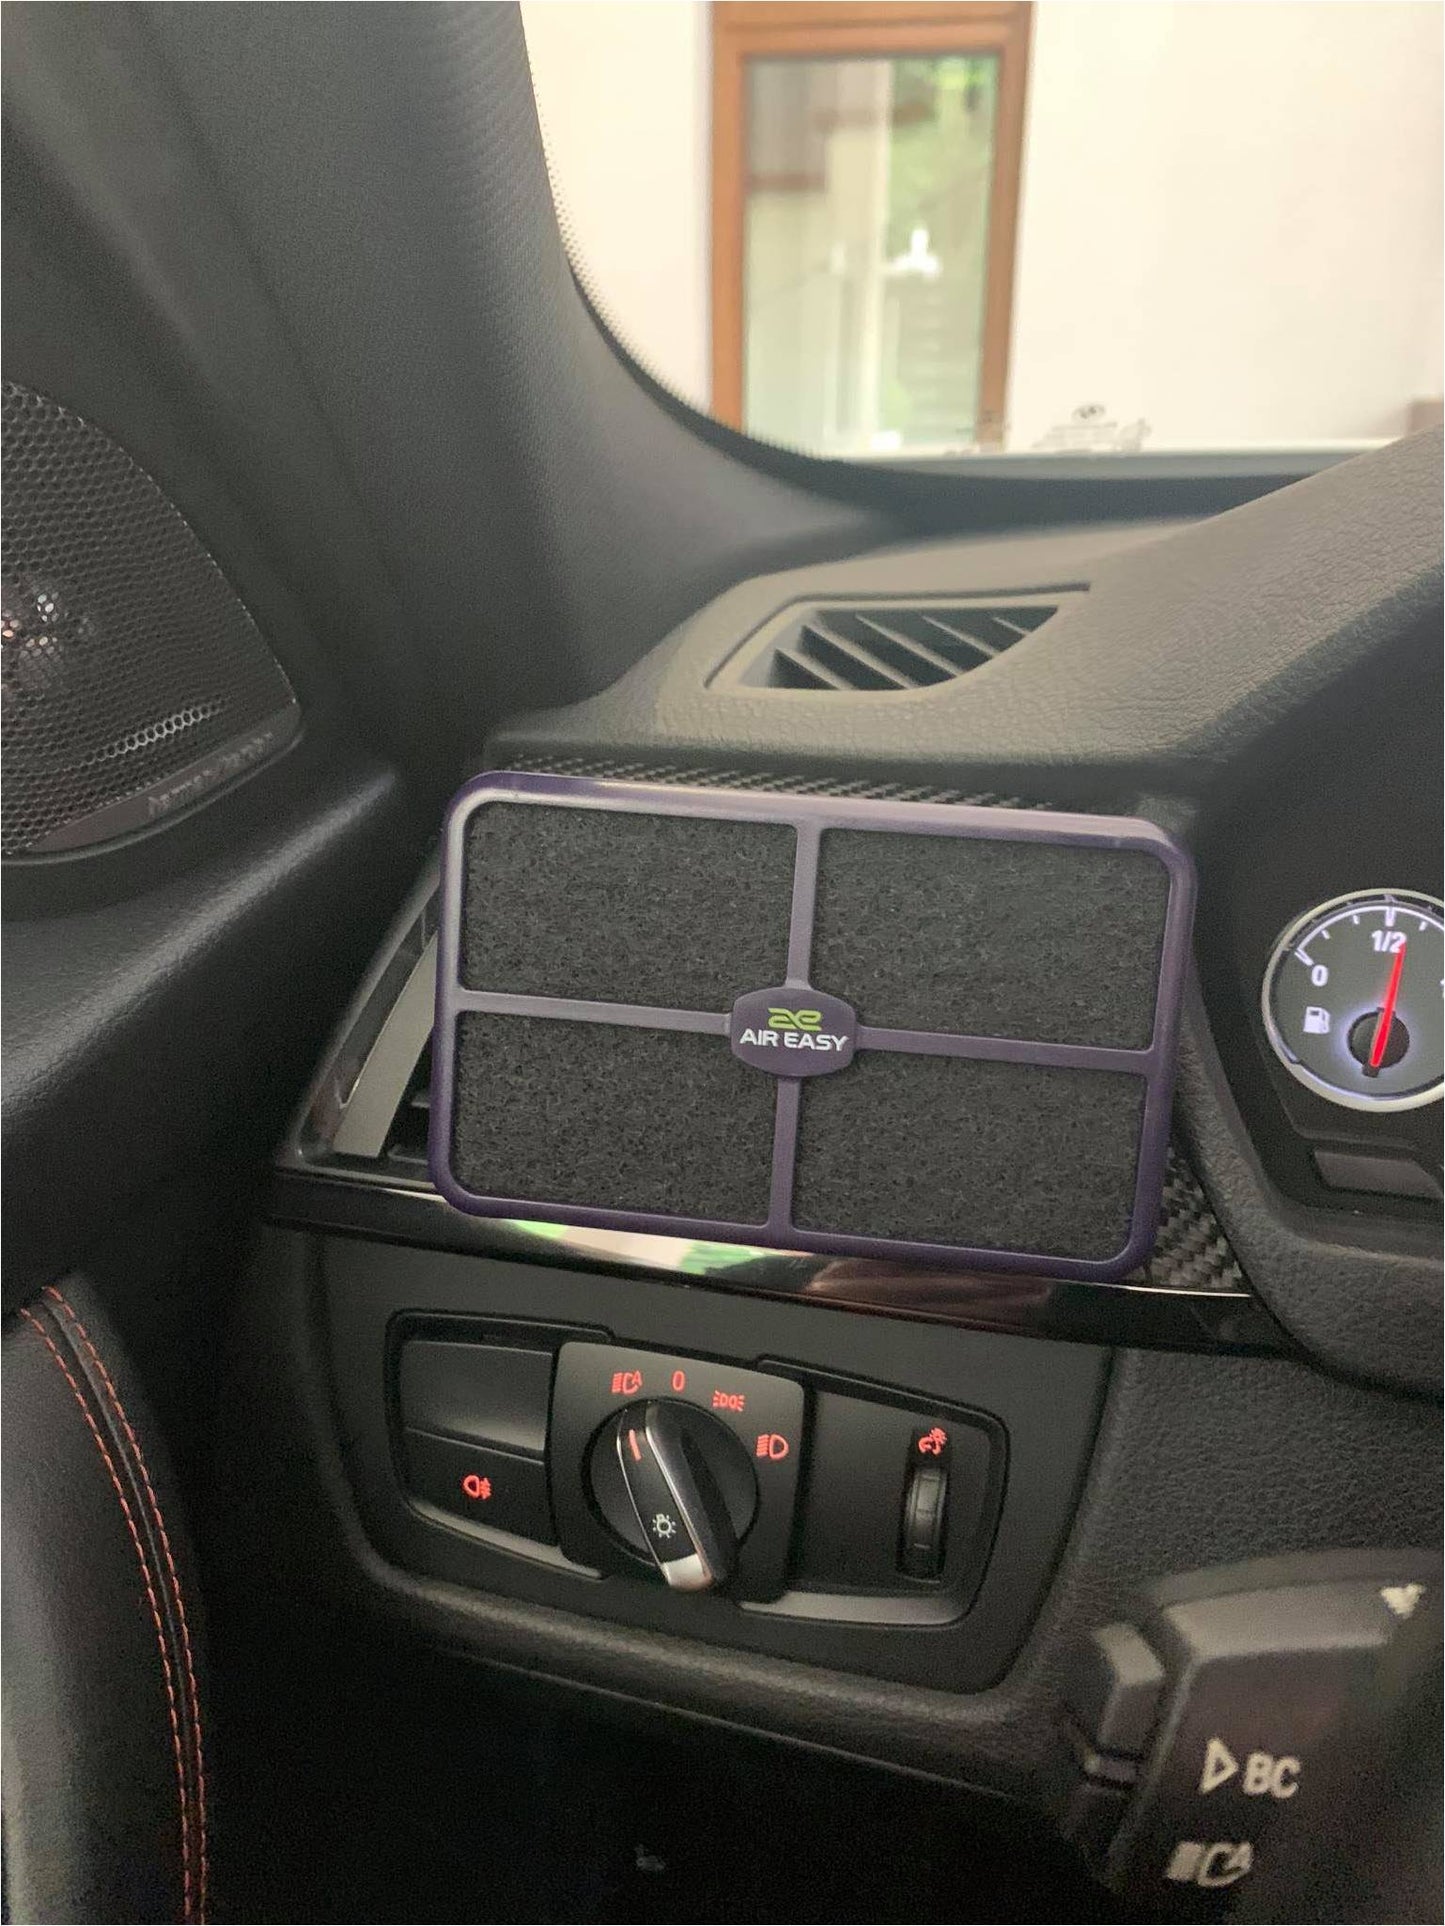 Air Easy Car Vent Nano Filter